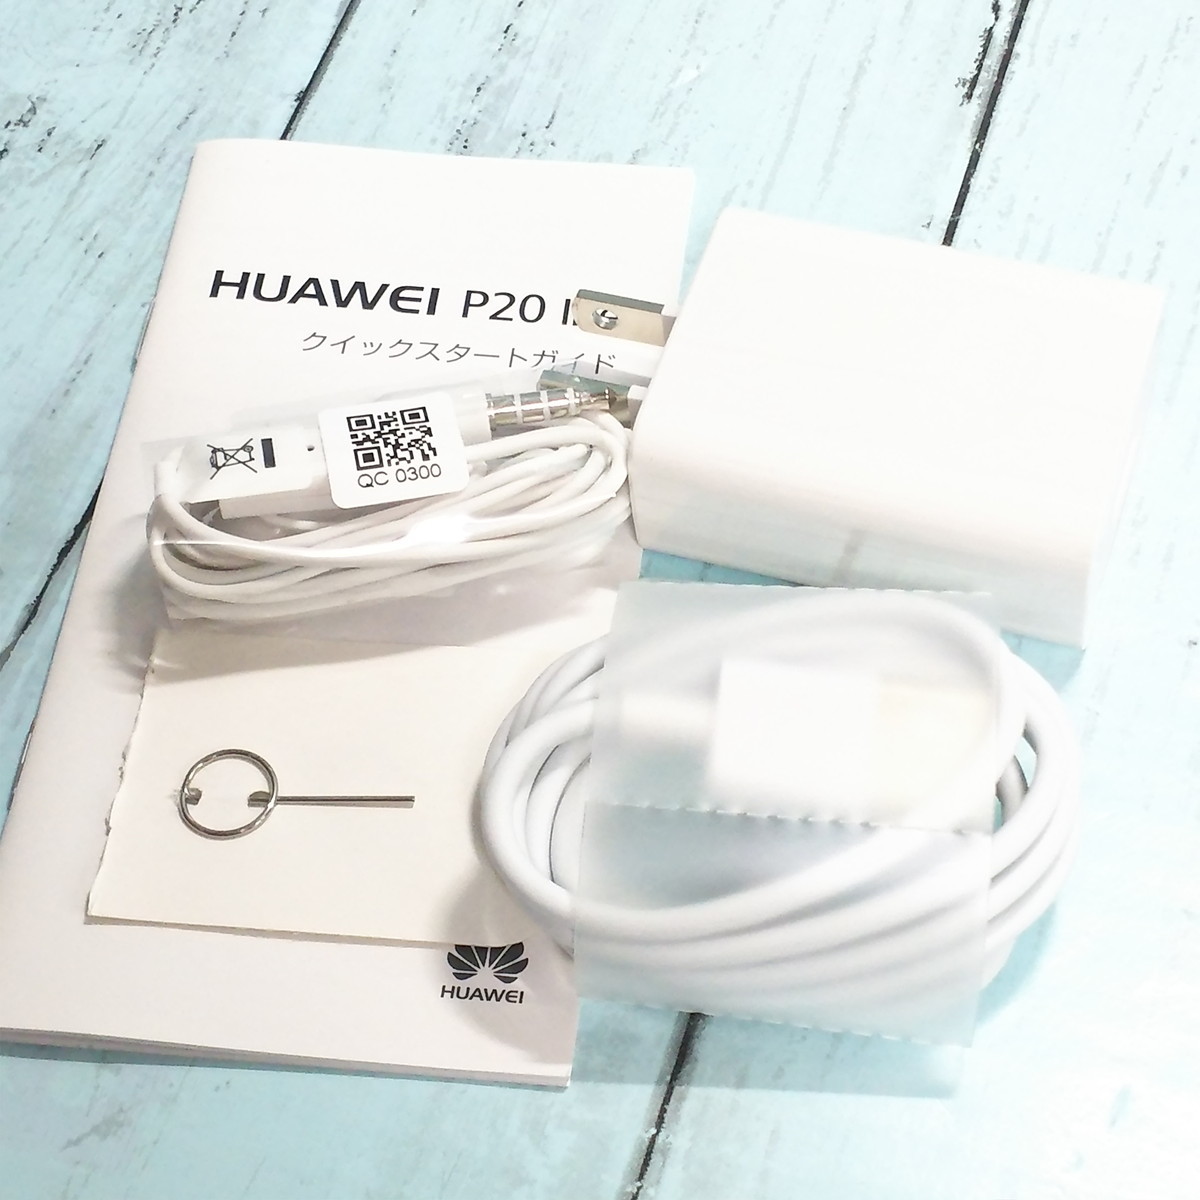 Huawei Y!mobile Huawei P20 lite ANE-LX2J (HWSDA2) サクラピンク 本体 白ロム SIMロック解除済み SIMフリー 07732_画像5